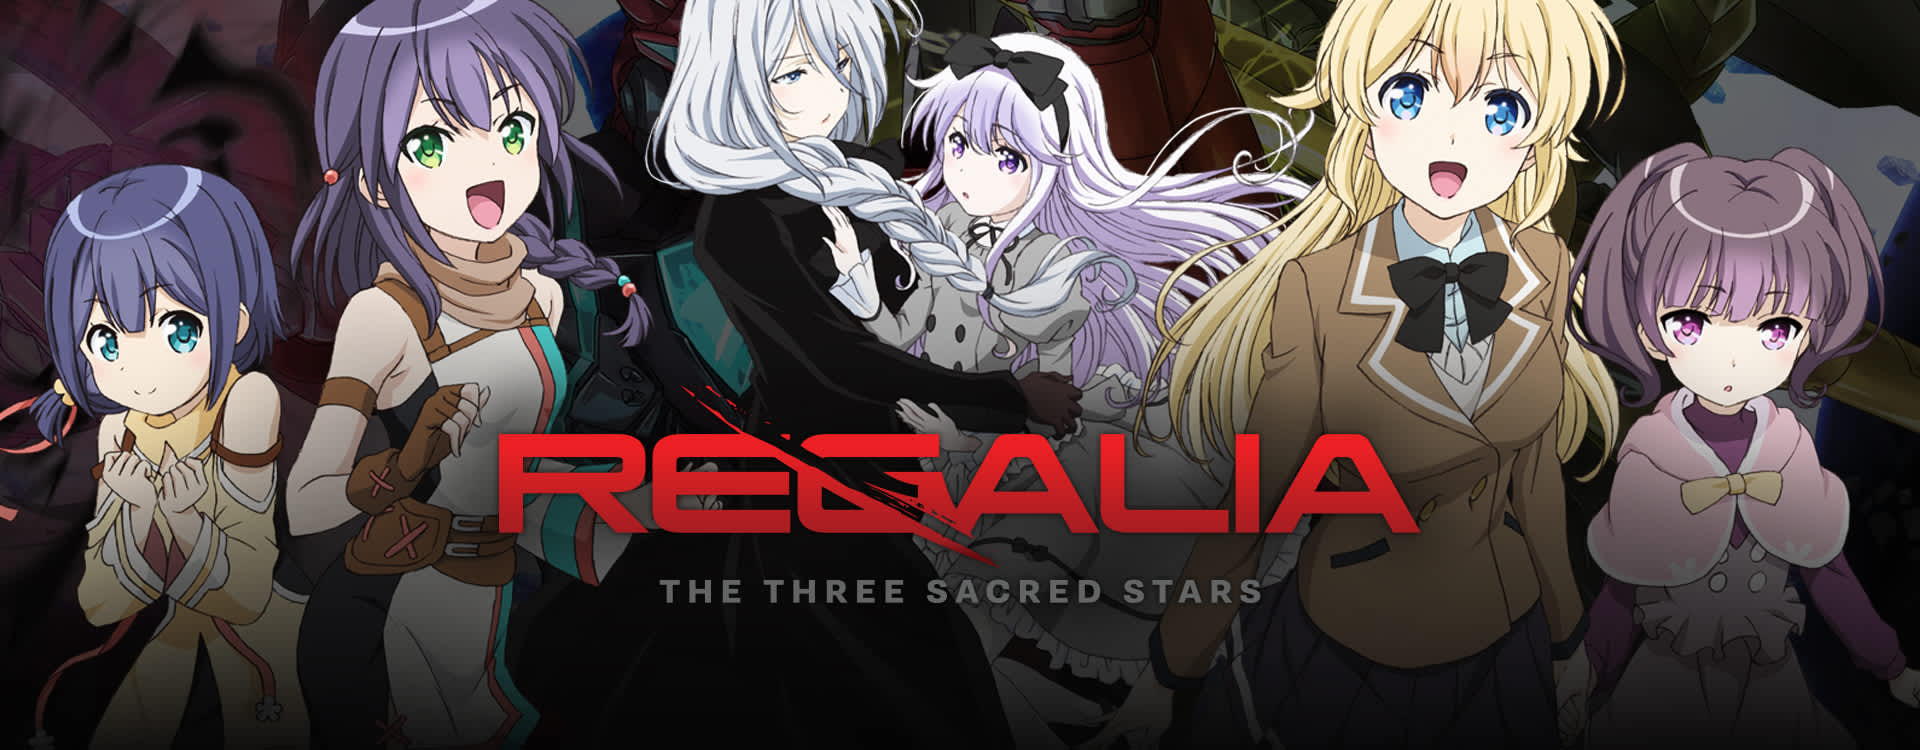 Regalia: The Three Sacred Stars